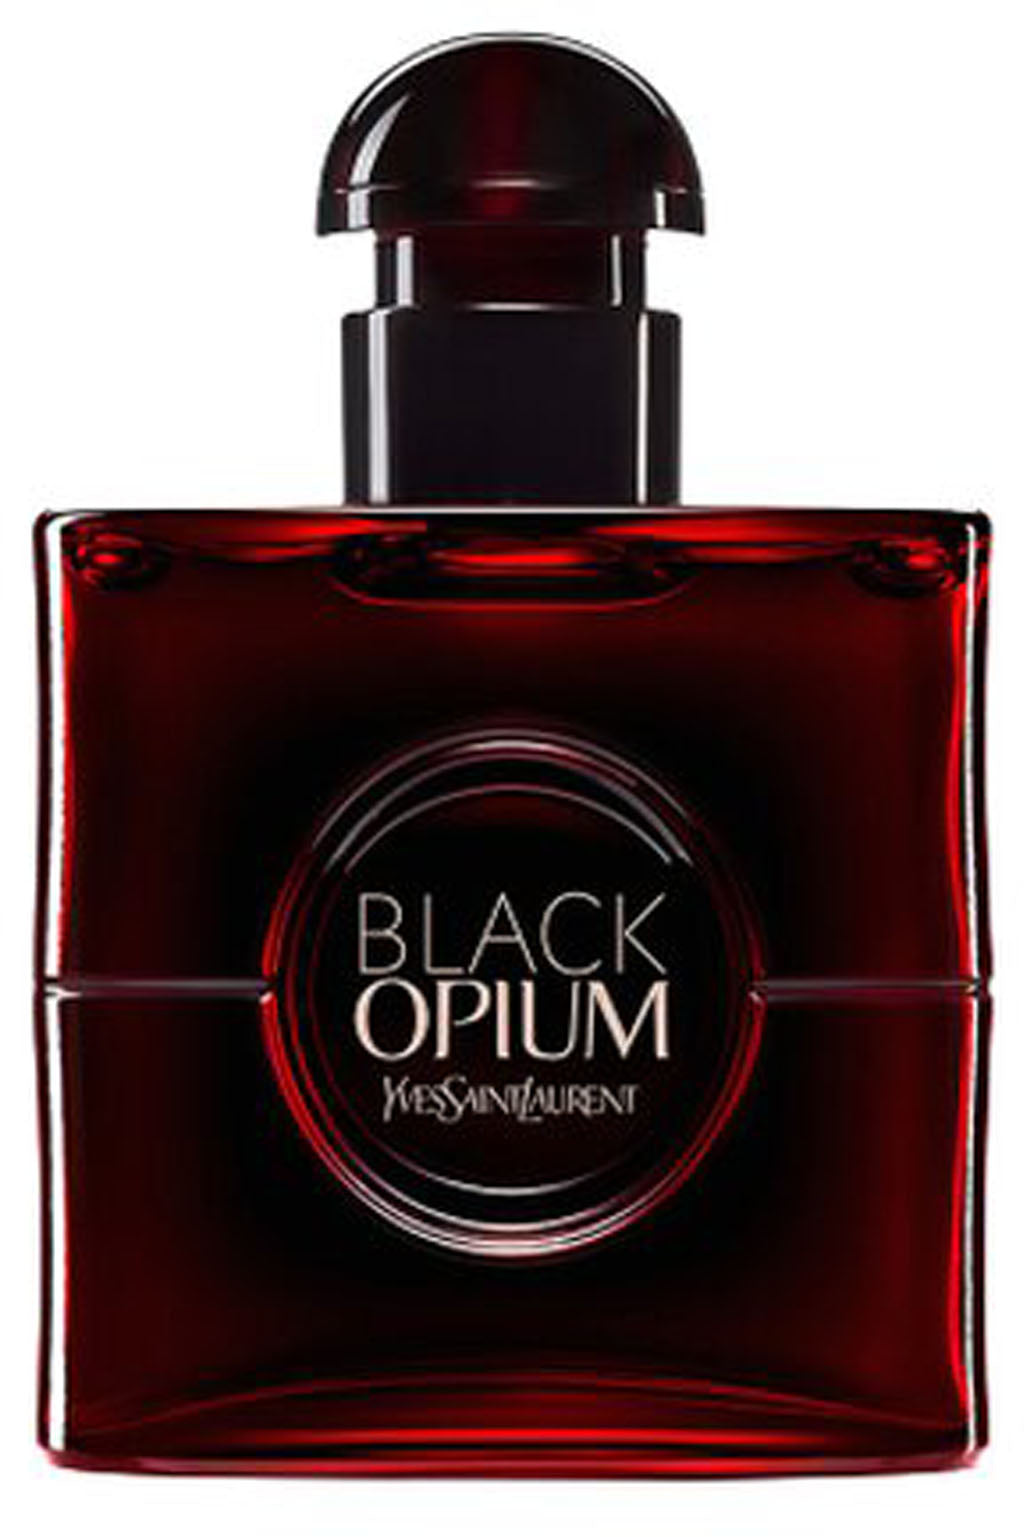 Ysl Black Opium Over Red 30 ml Spray